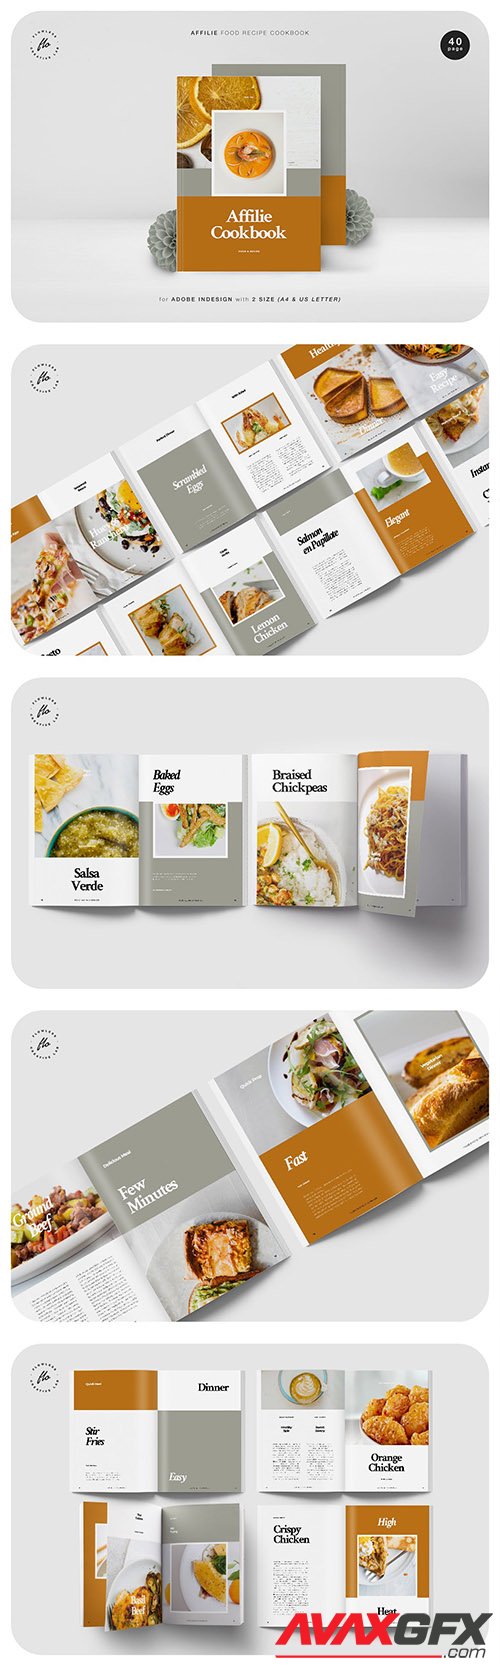 Affilie Food Recipe Cookbook